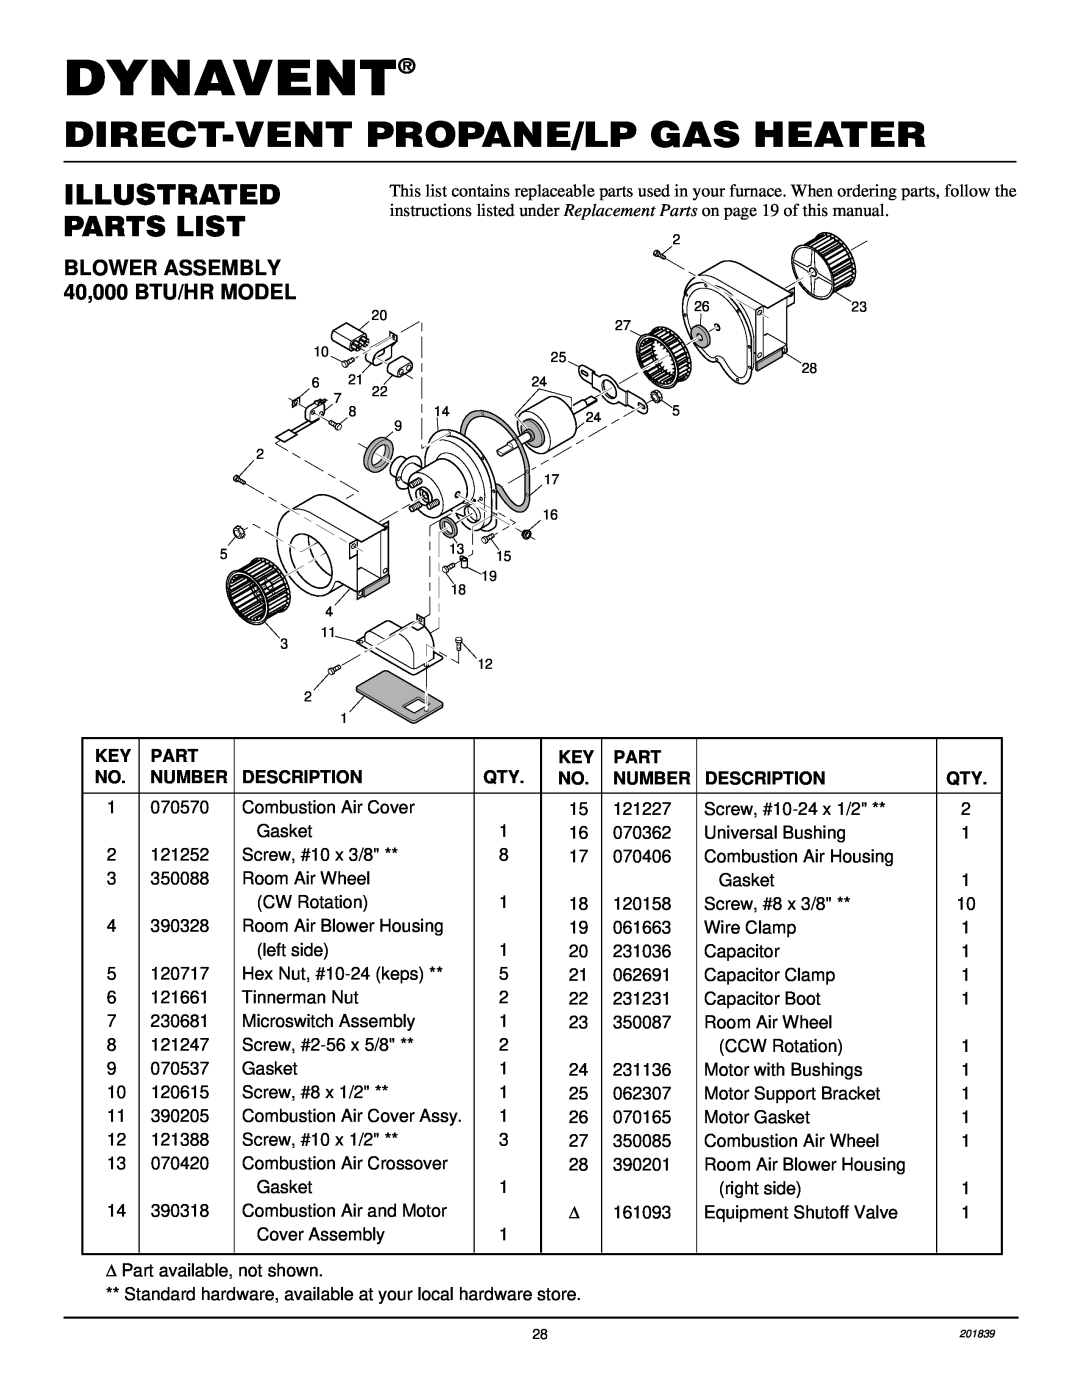 Desa DNV25PB Dynavent, Direct-Ventpropane/Lp Gas Heater, Illustrated Parts List, BLOWER ASSEMBLY 40,000 BTU/HR MODEL 